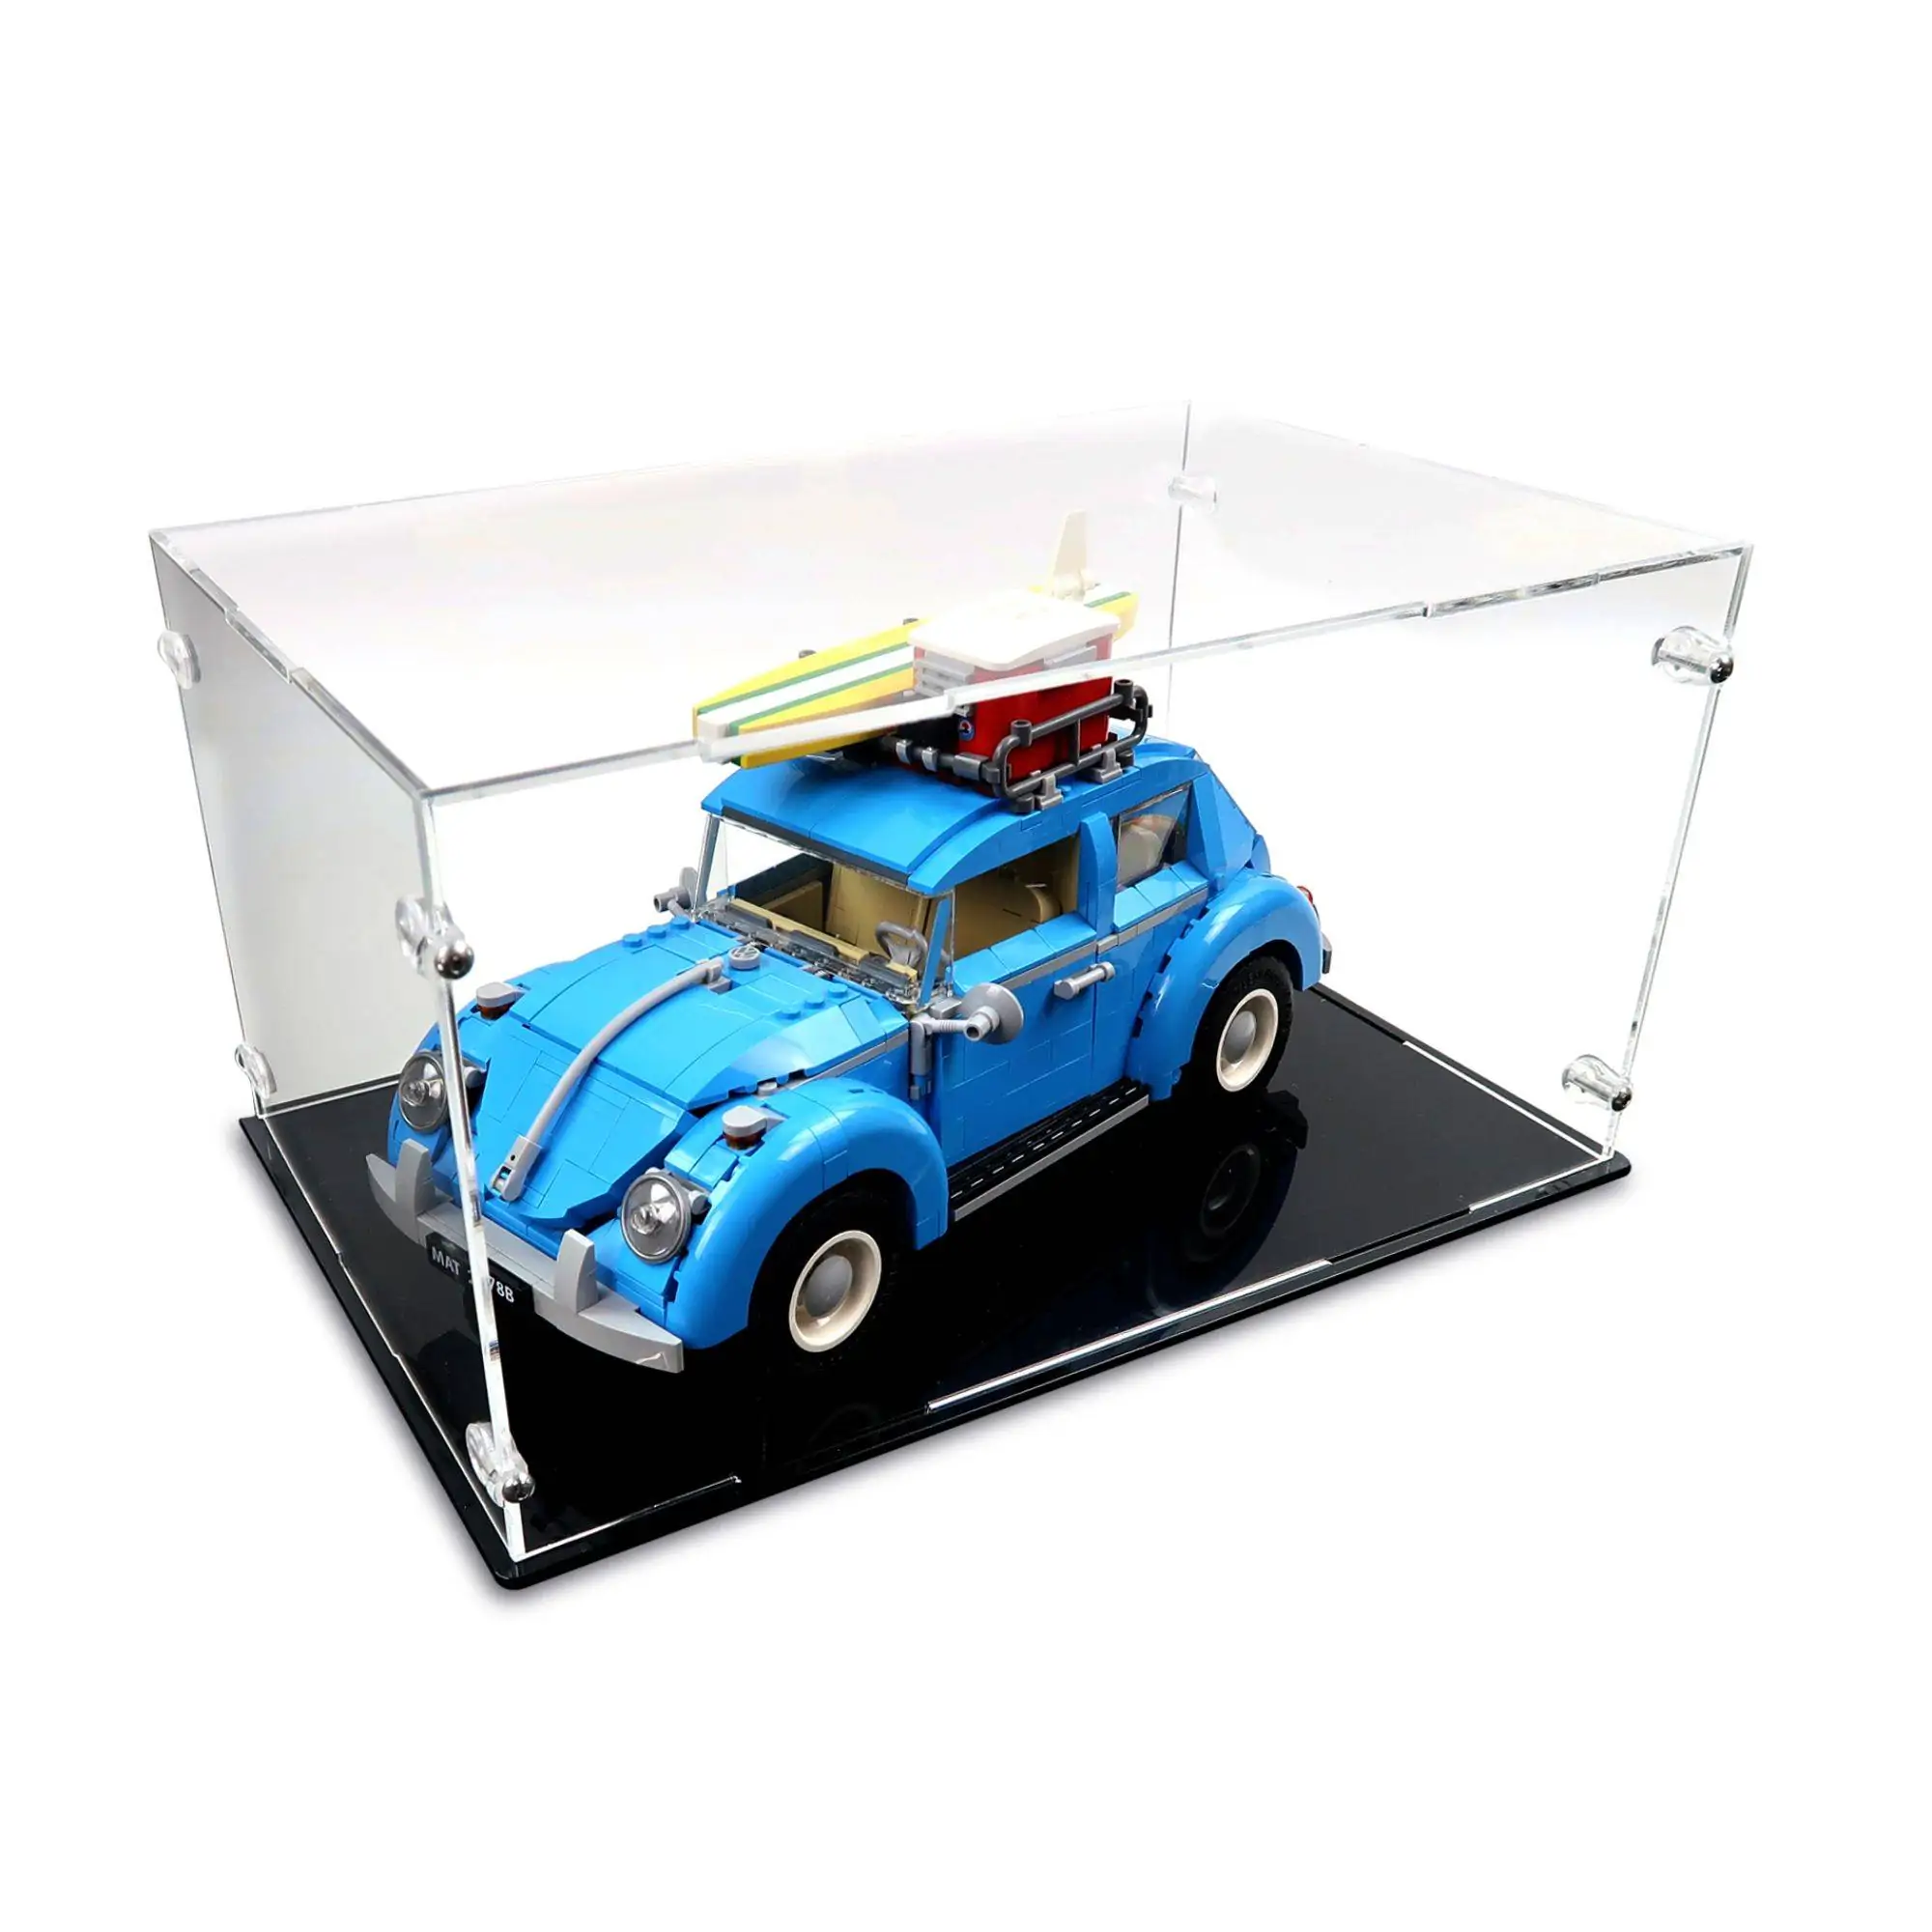 Acrylic Display Case for LEGO Volkswagen iDisplayit